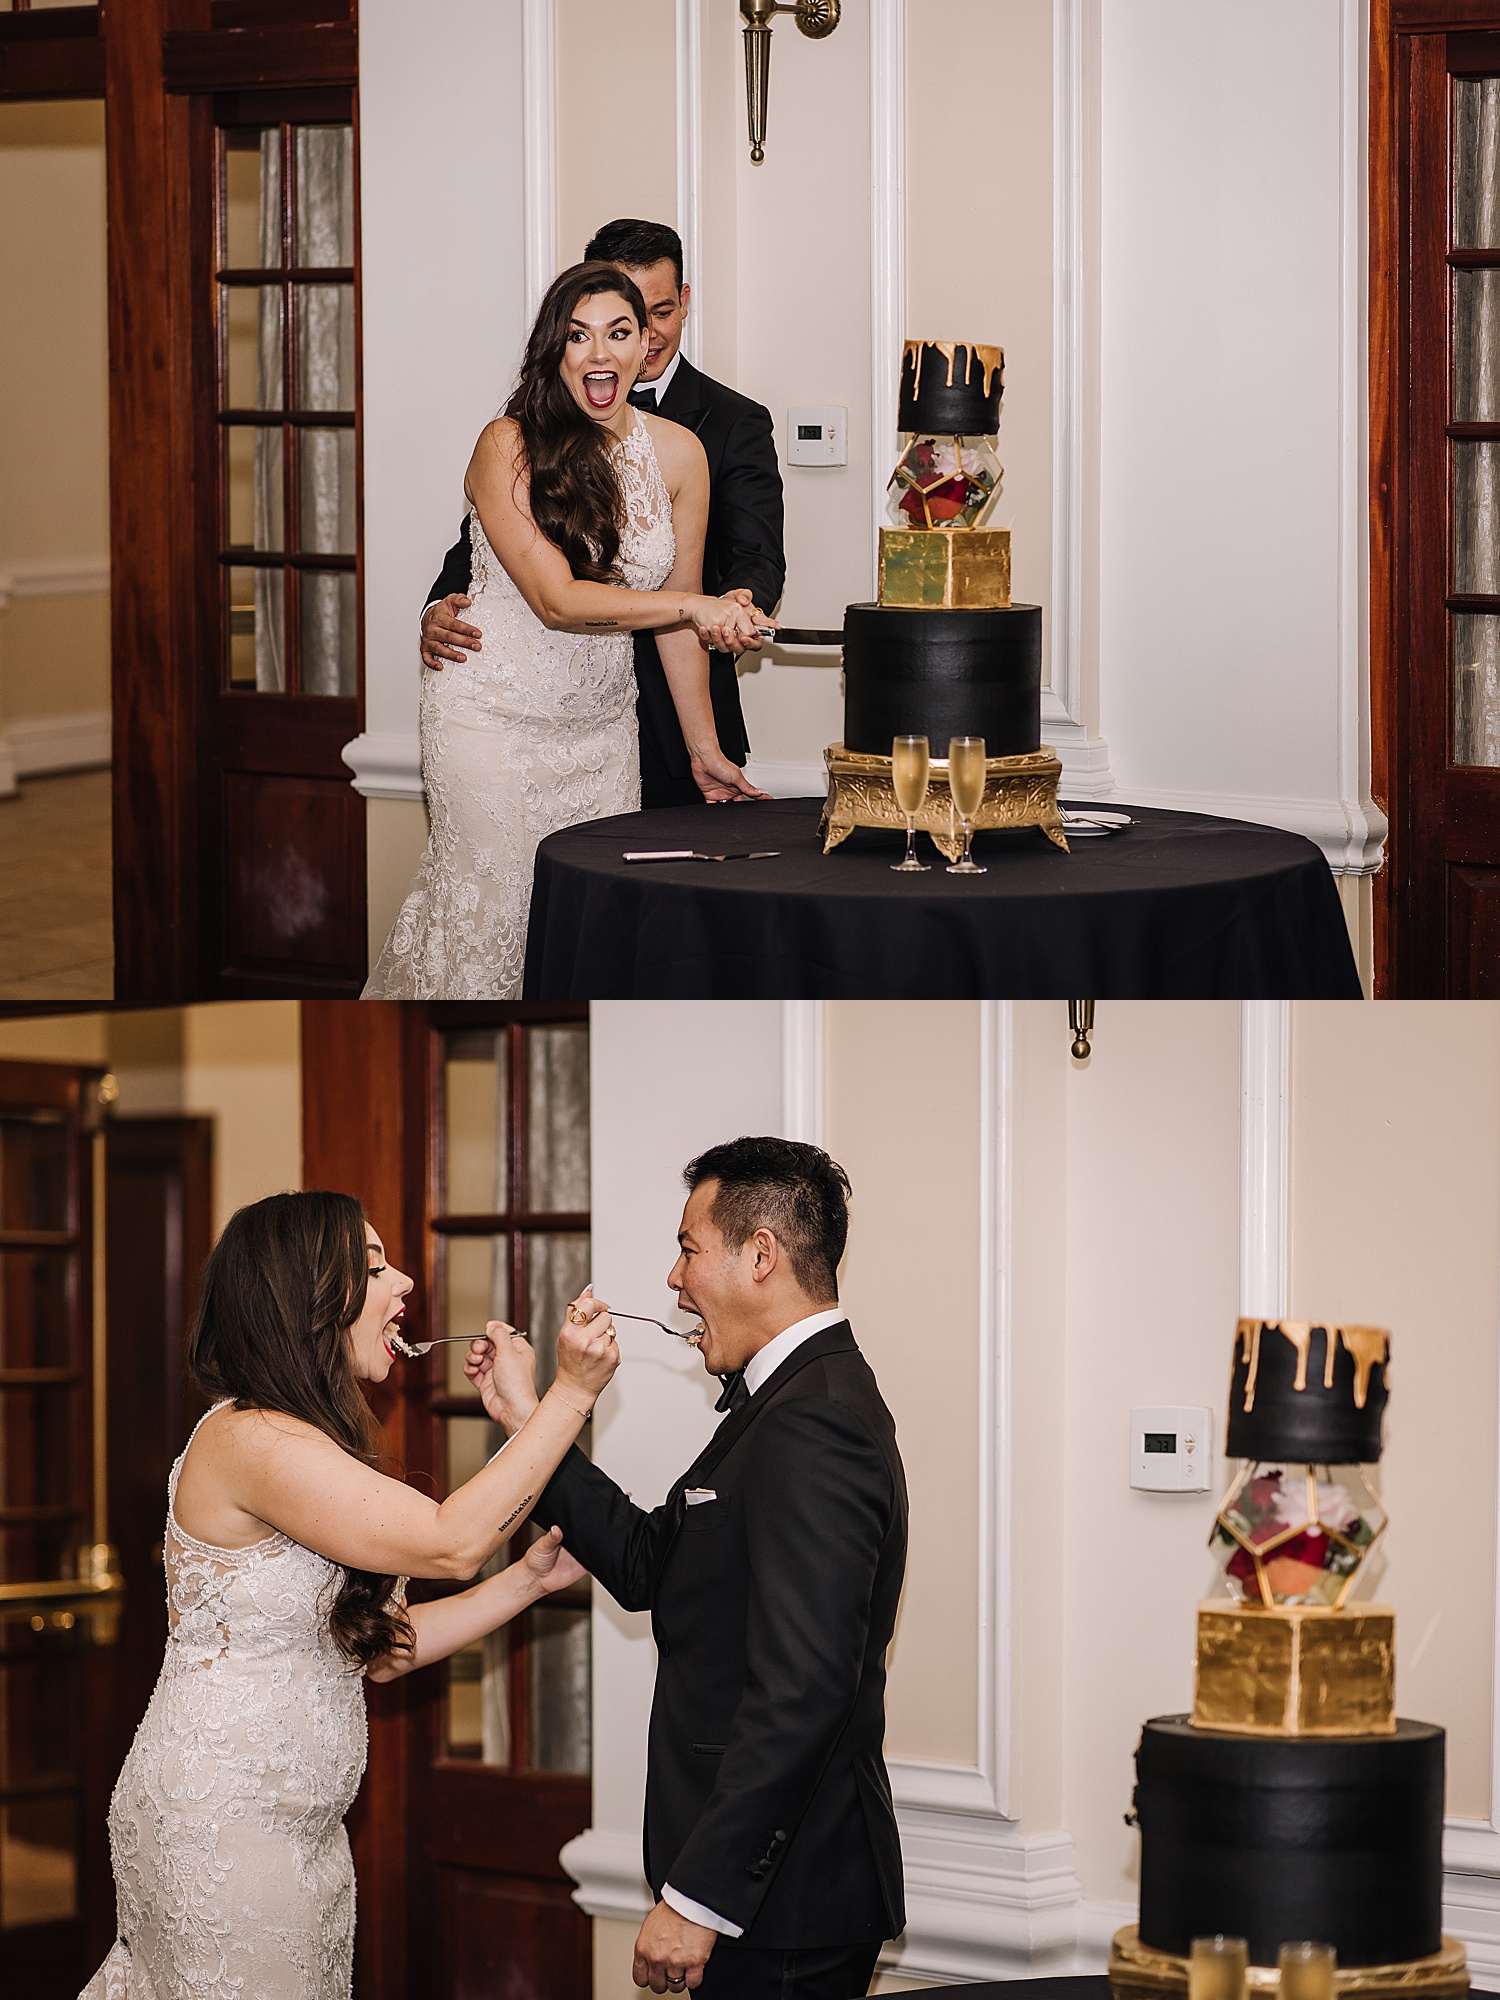 bride and groom cut wedding cake at wedding reception 